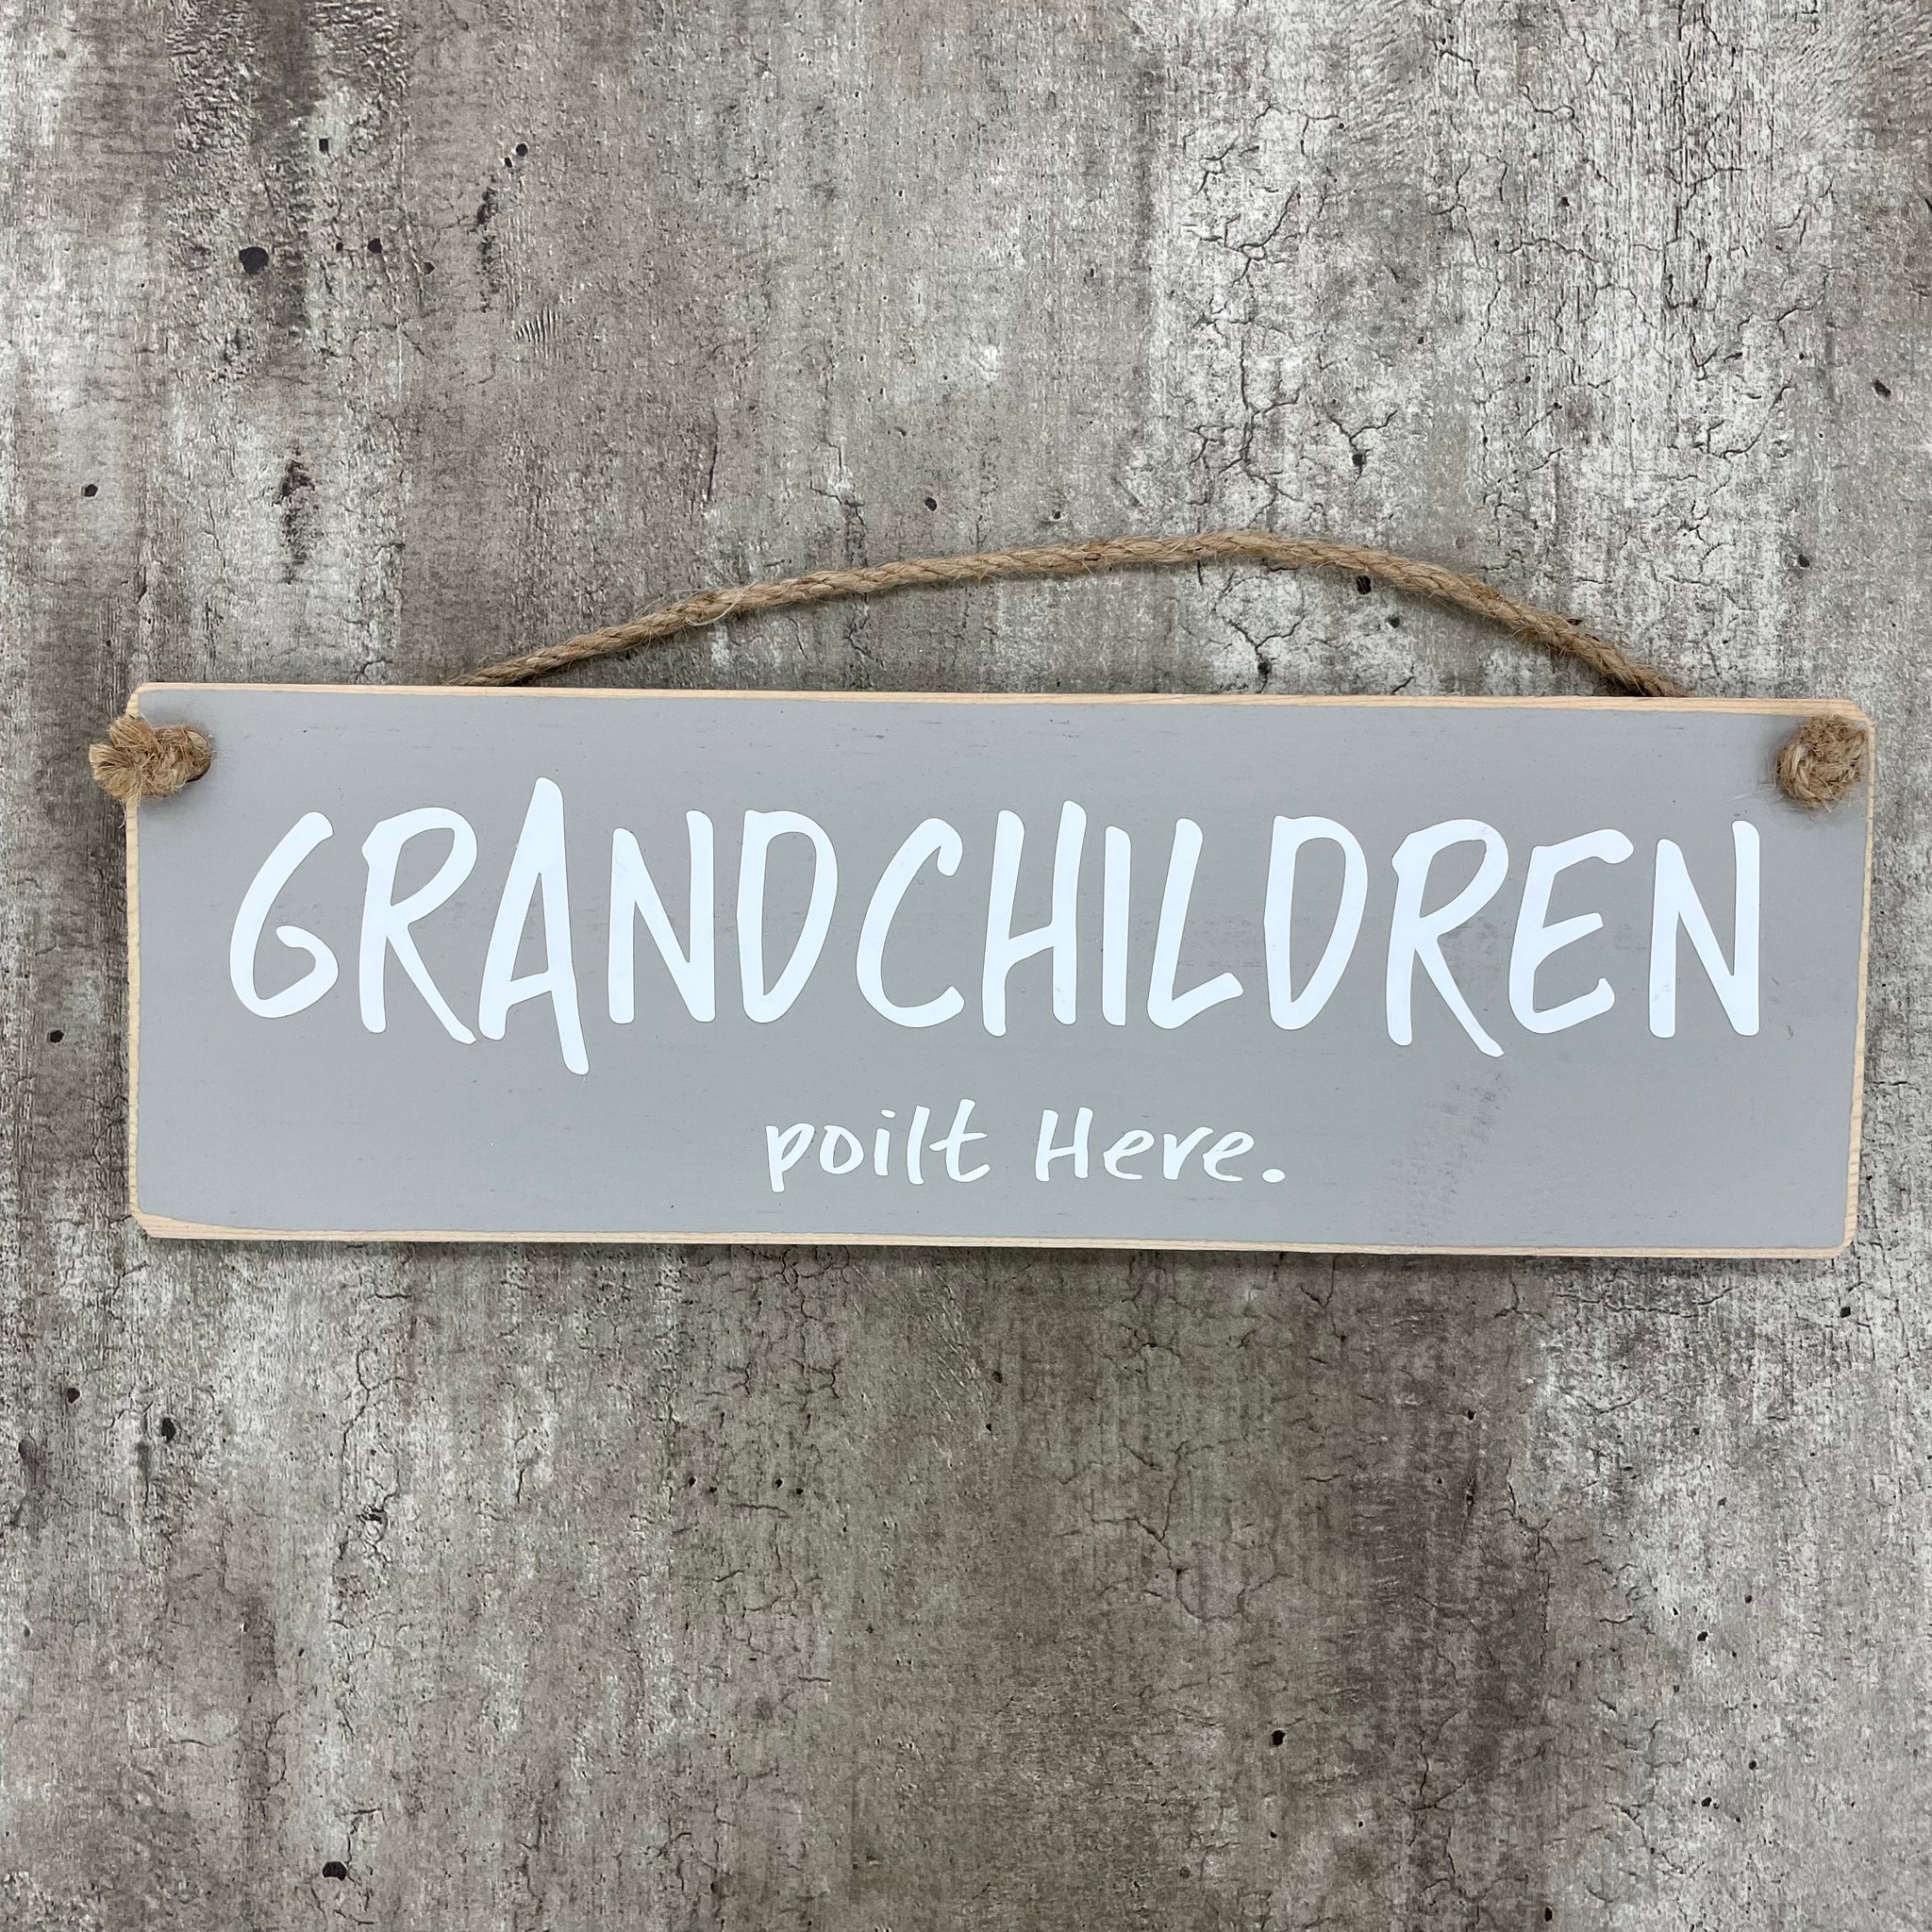 Wooden Hanging Sign - "Grandchildren spoilt here."